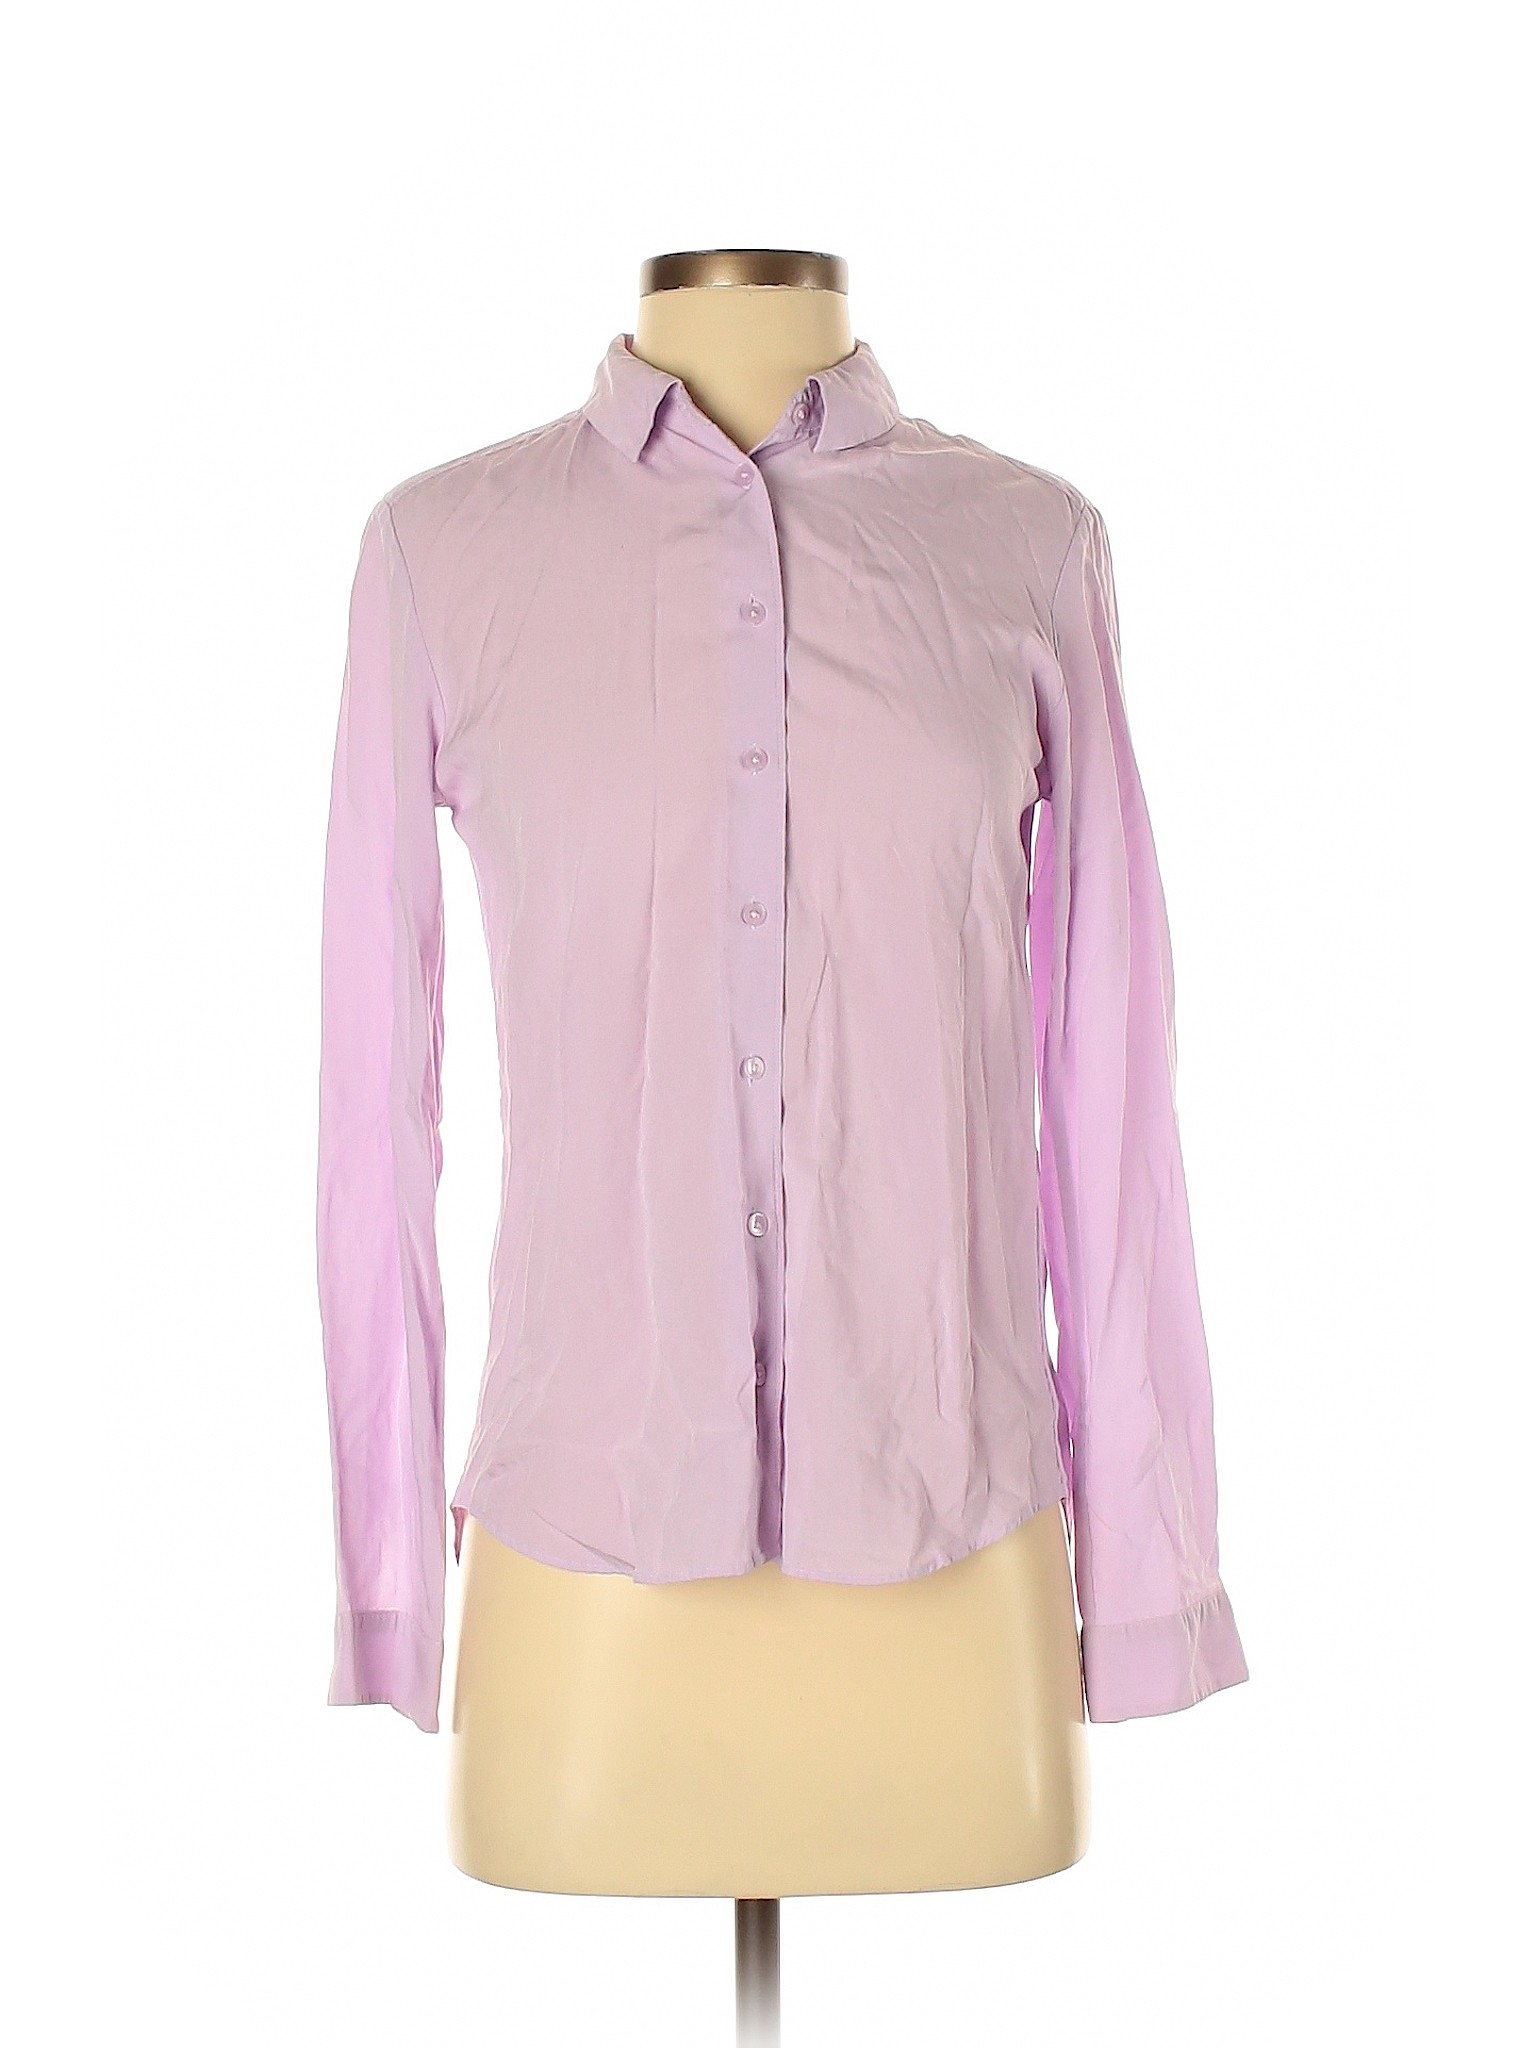 Uniqlo Women Purple Long Sleeve Button-Down Shirt XS | eBay